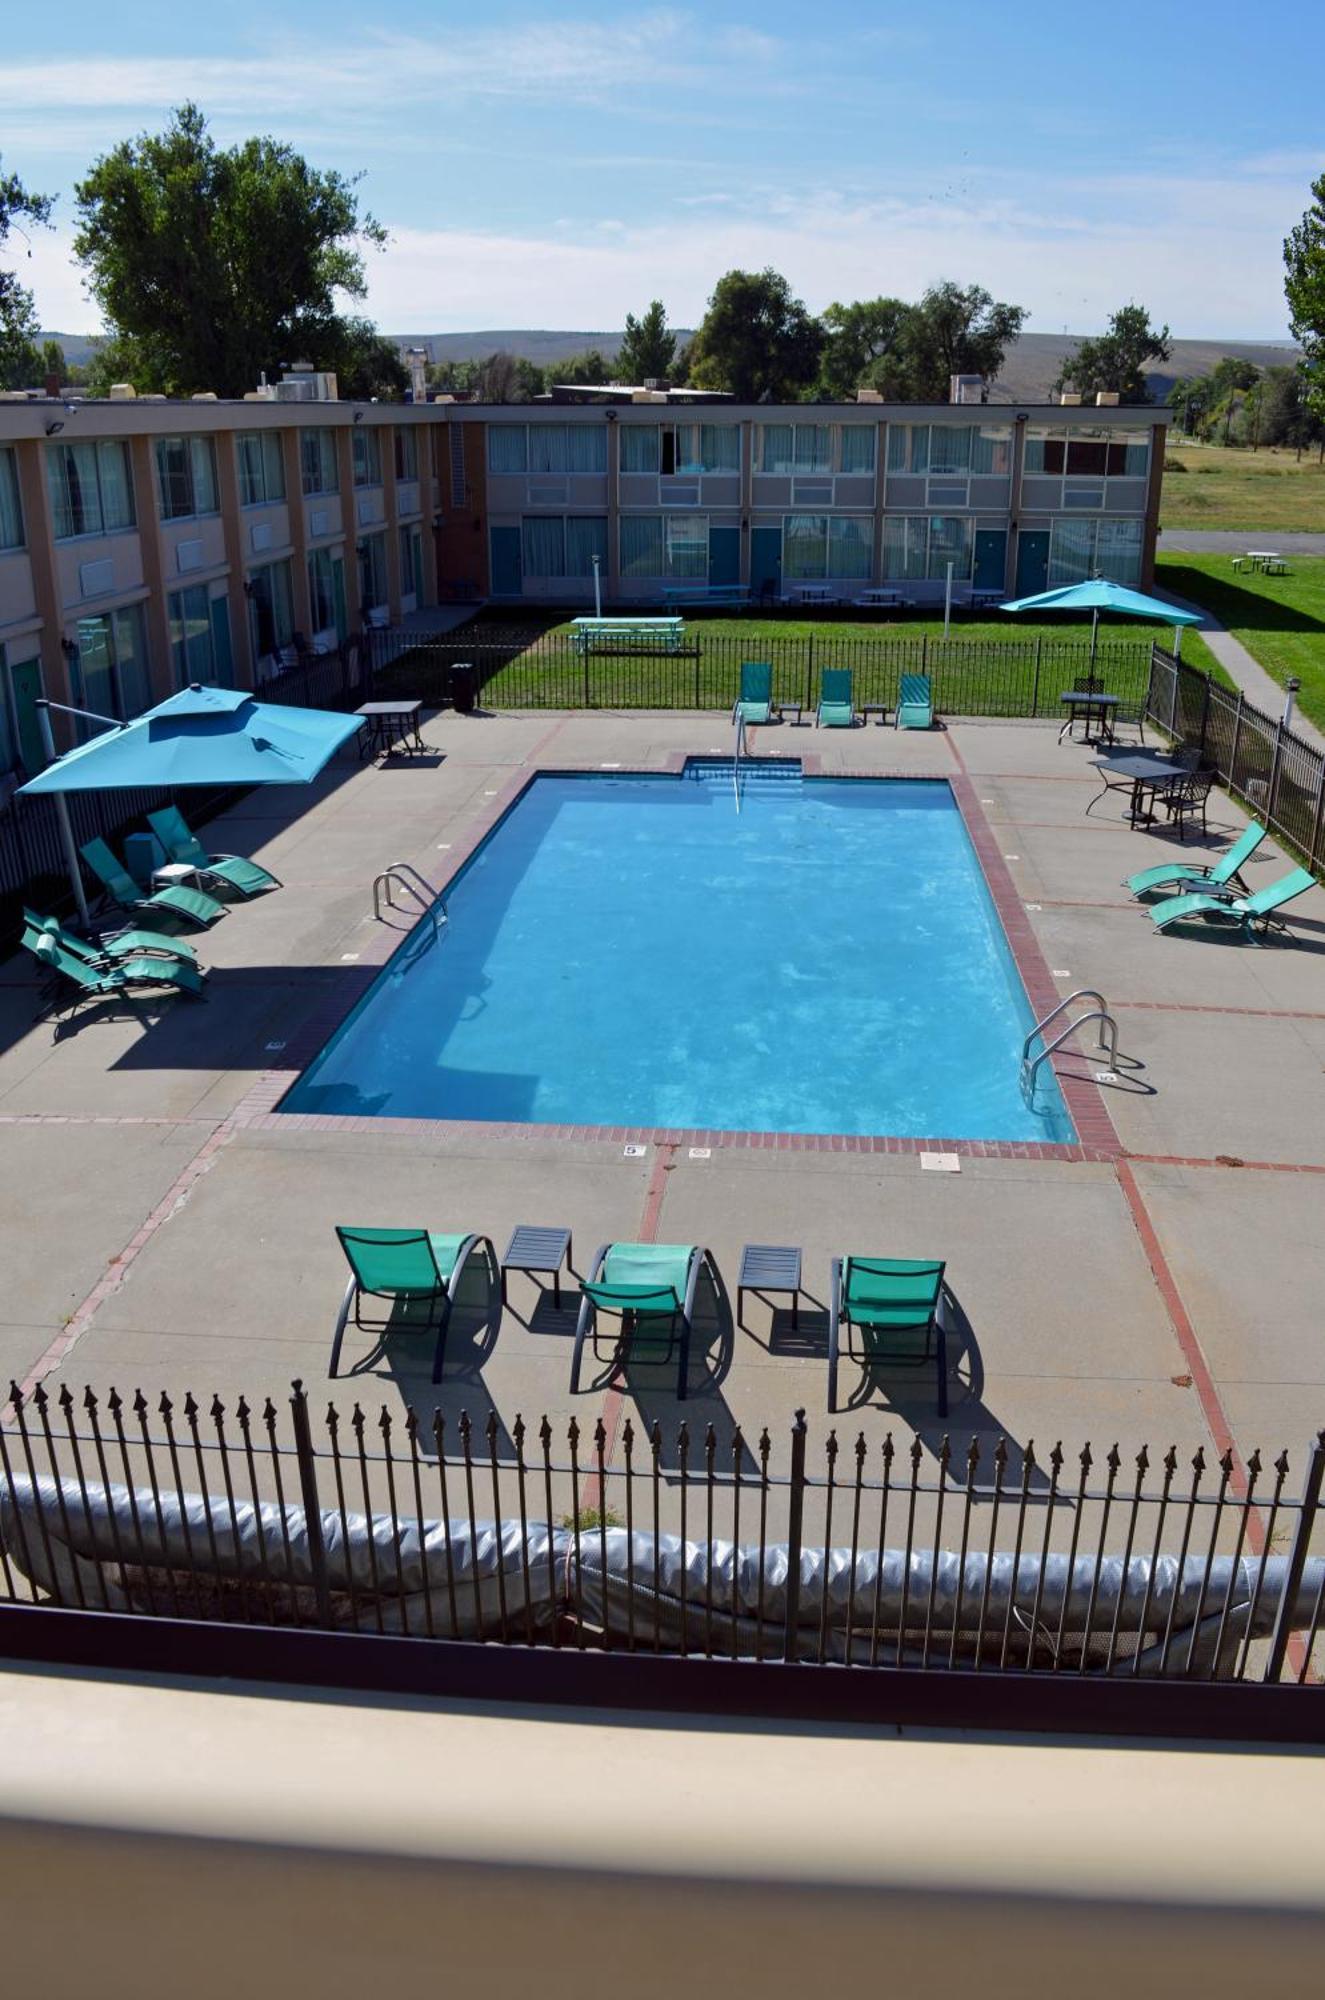 Hot Springs Hotel & Spa Thermopolis Exterior photo